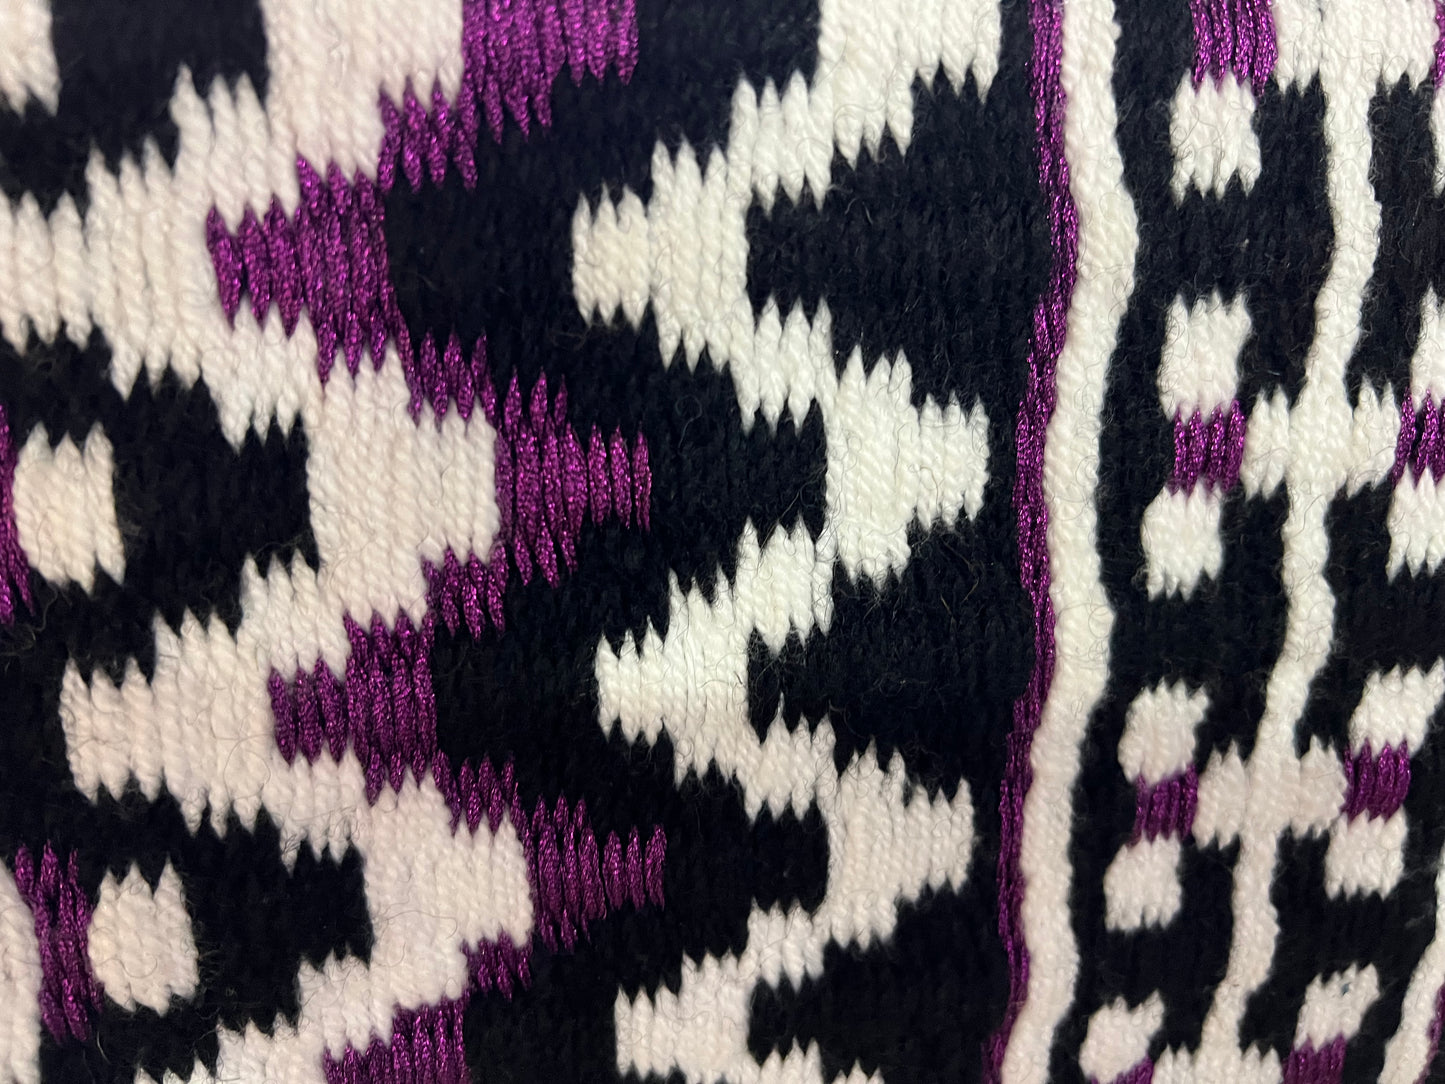 87. Oversized blanket black, white metallic purple